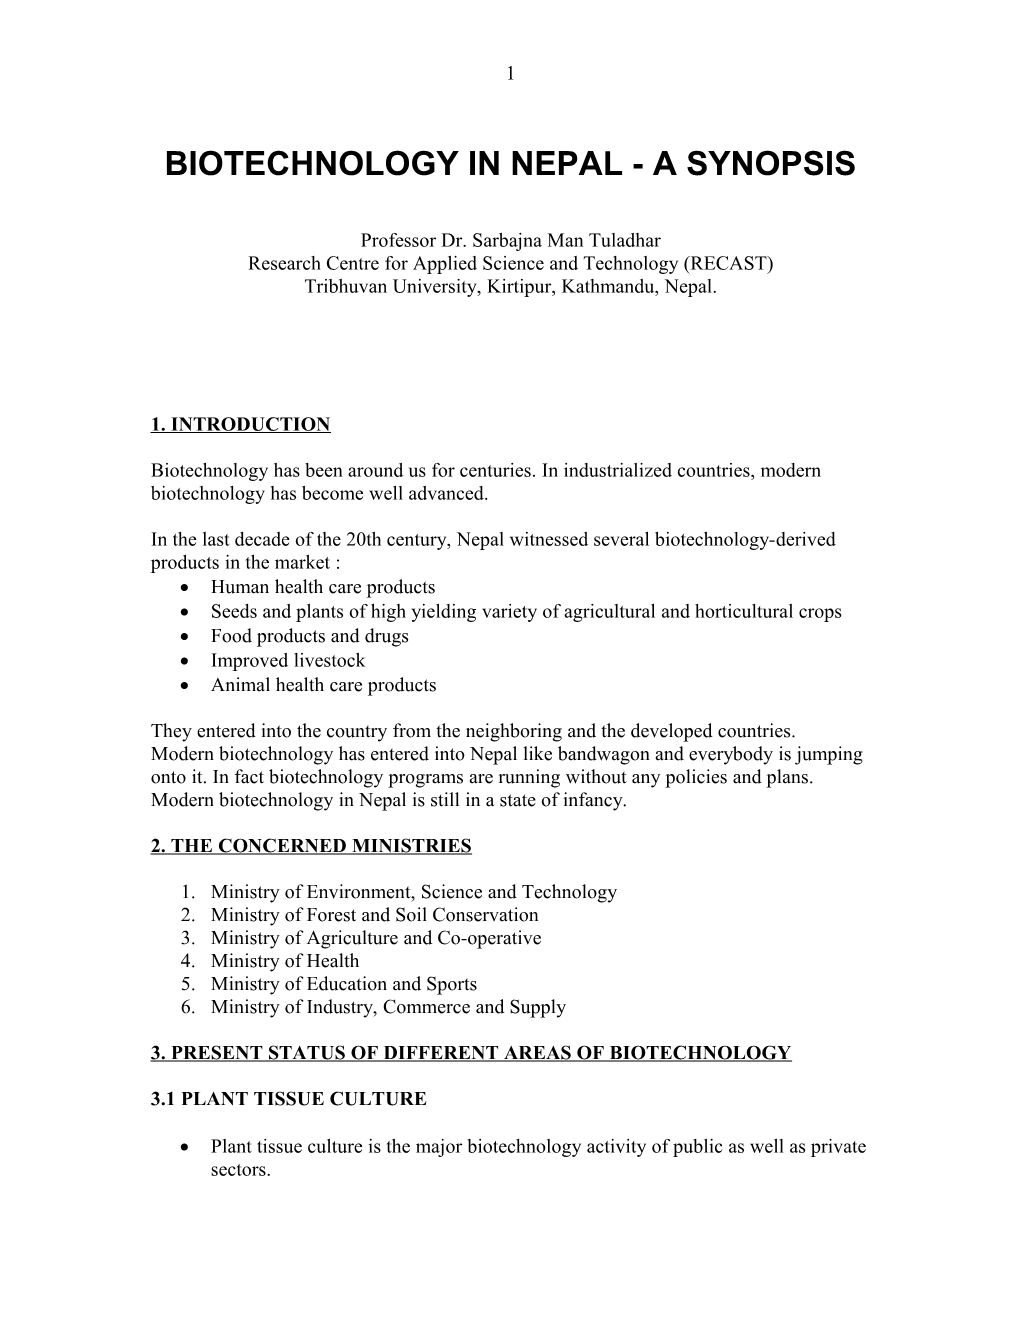 Biotechnology in Nepal